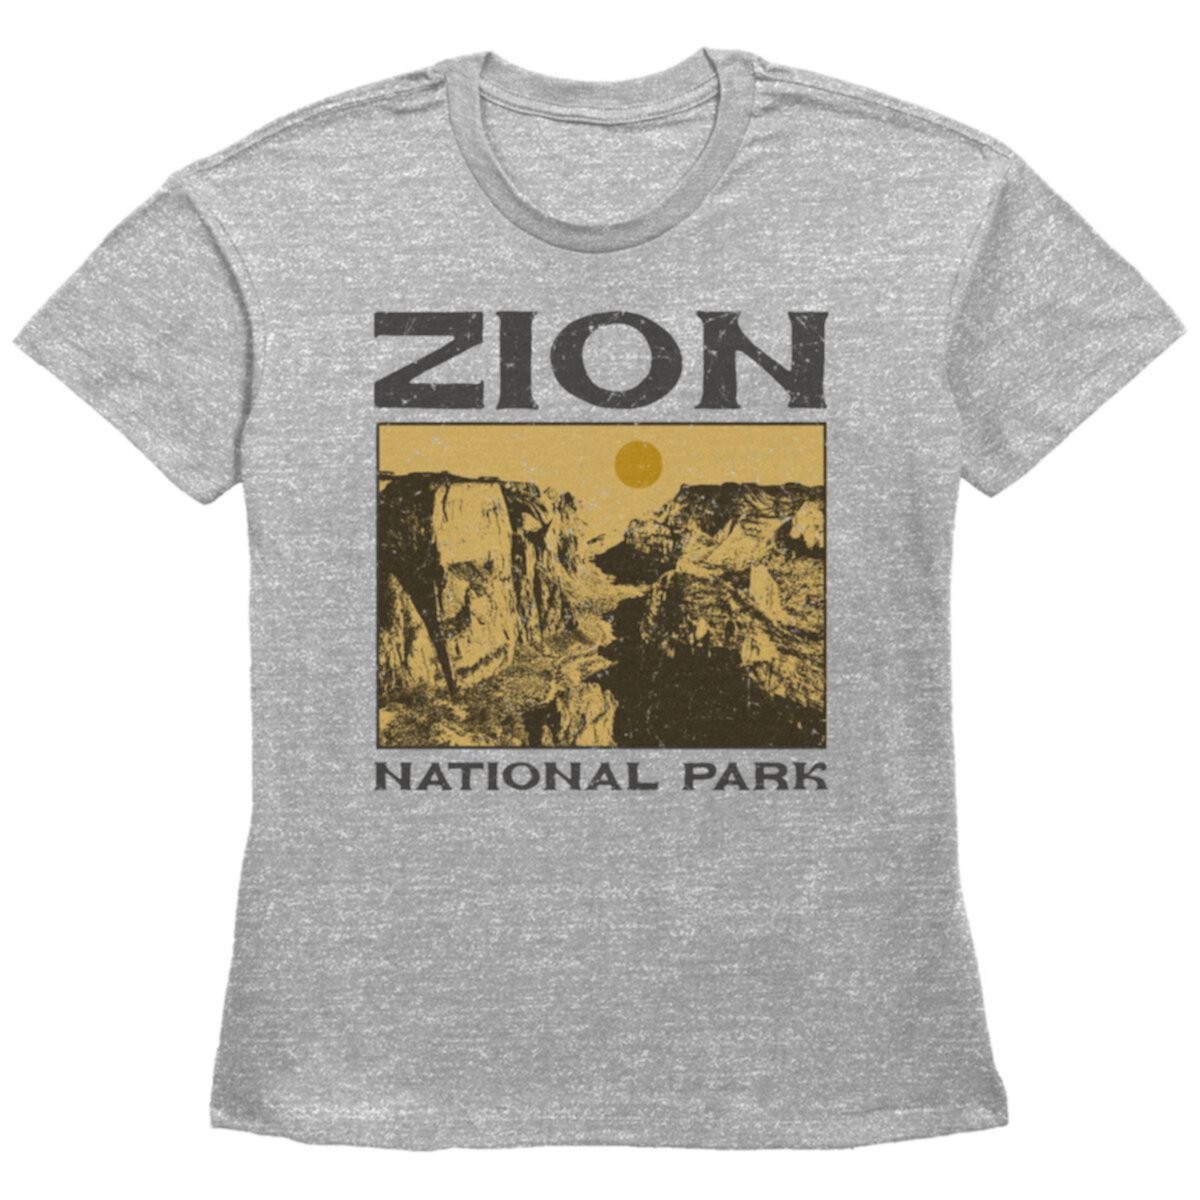 Женская футболка Fifth с короткими рукавами и графическим рисунком в национальном парке Сан-Цион FIFTH SUN